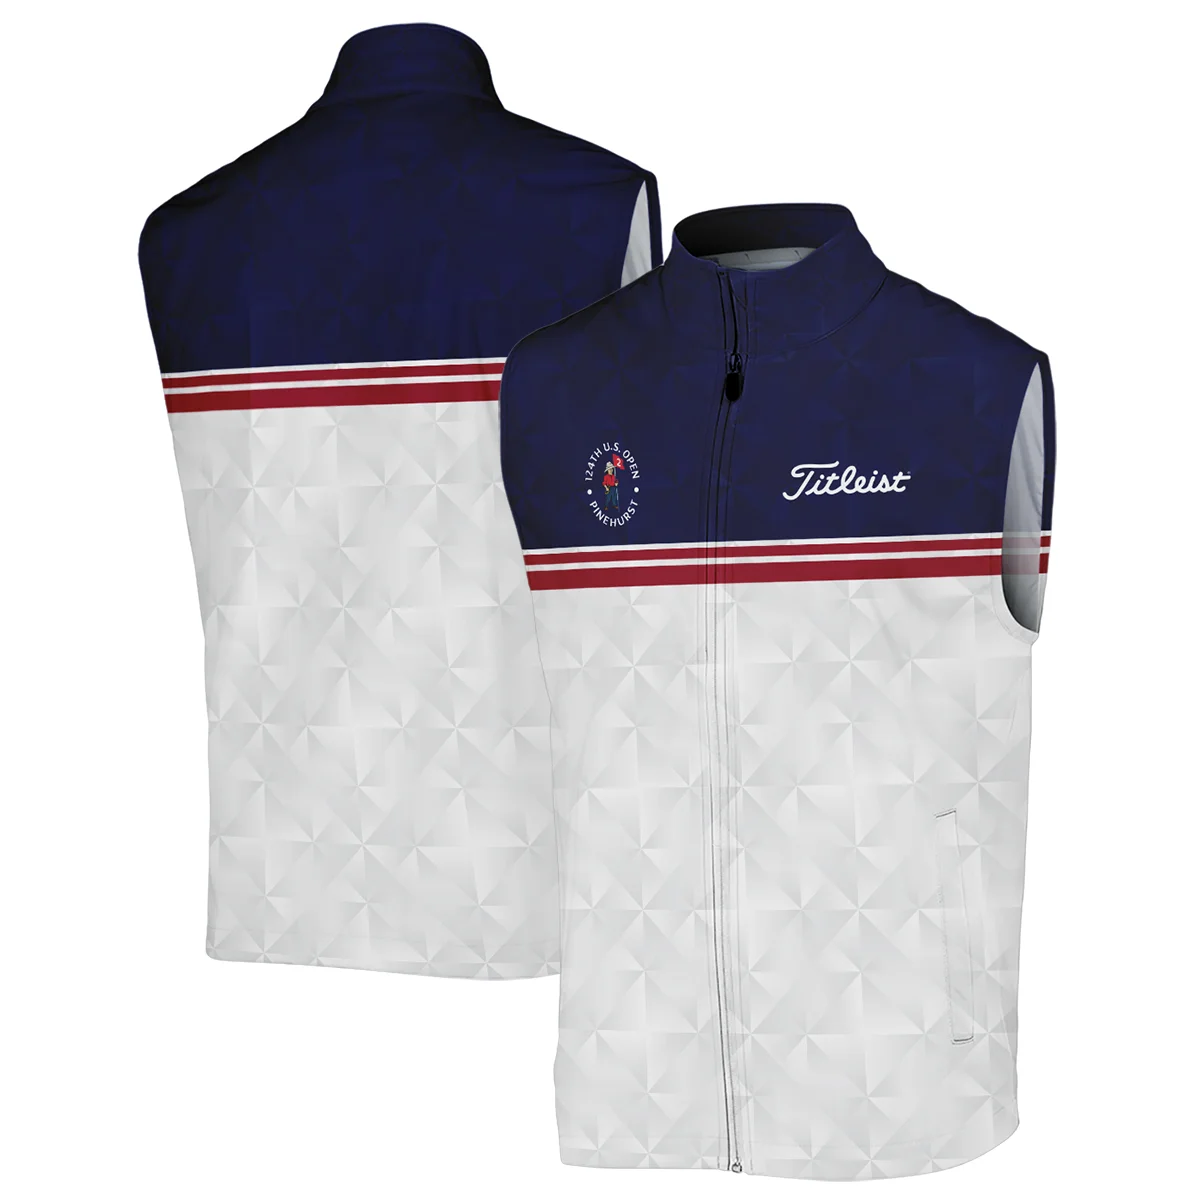 Golf Sport 124th U.S. Open Pinehurst Titleist Bomber Jacket Dark Blue White Abstract Geometric Triangles All Over Print Bomber Jacket